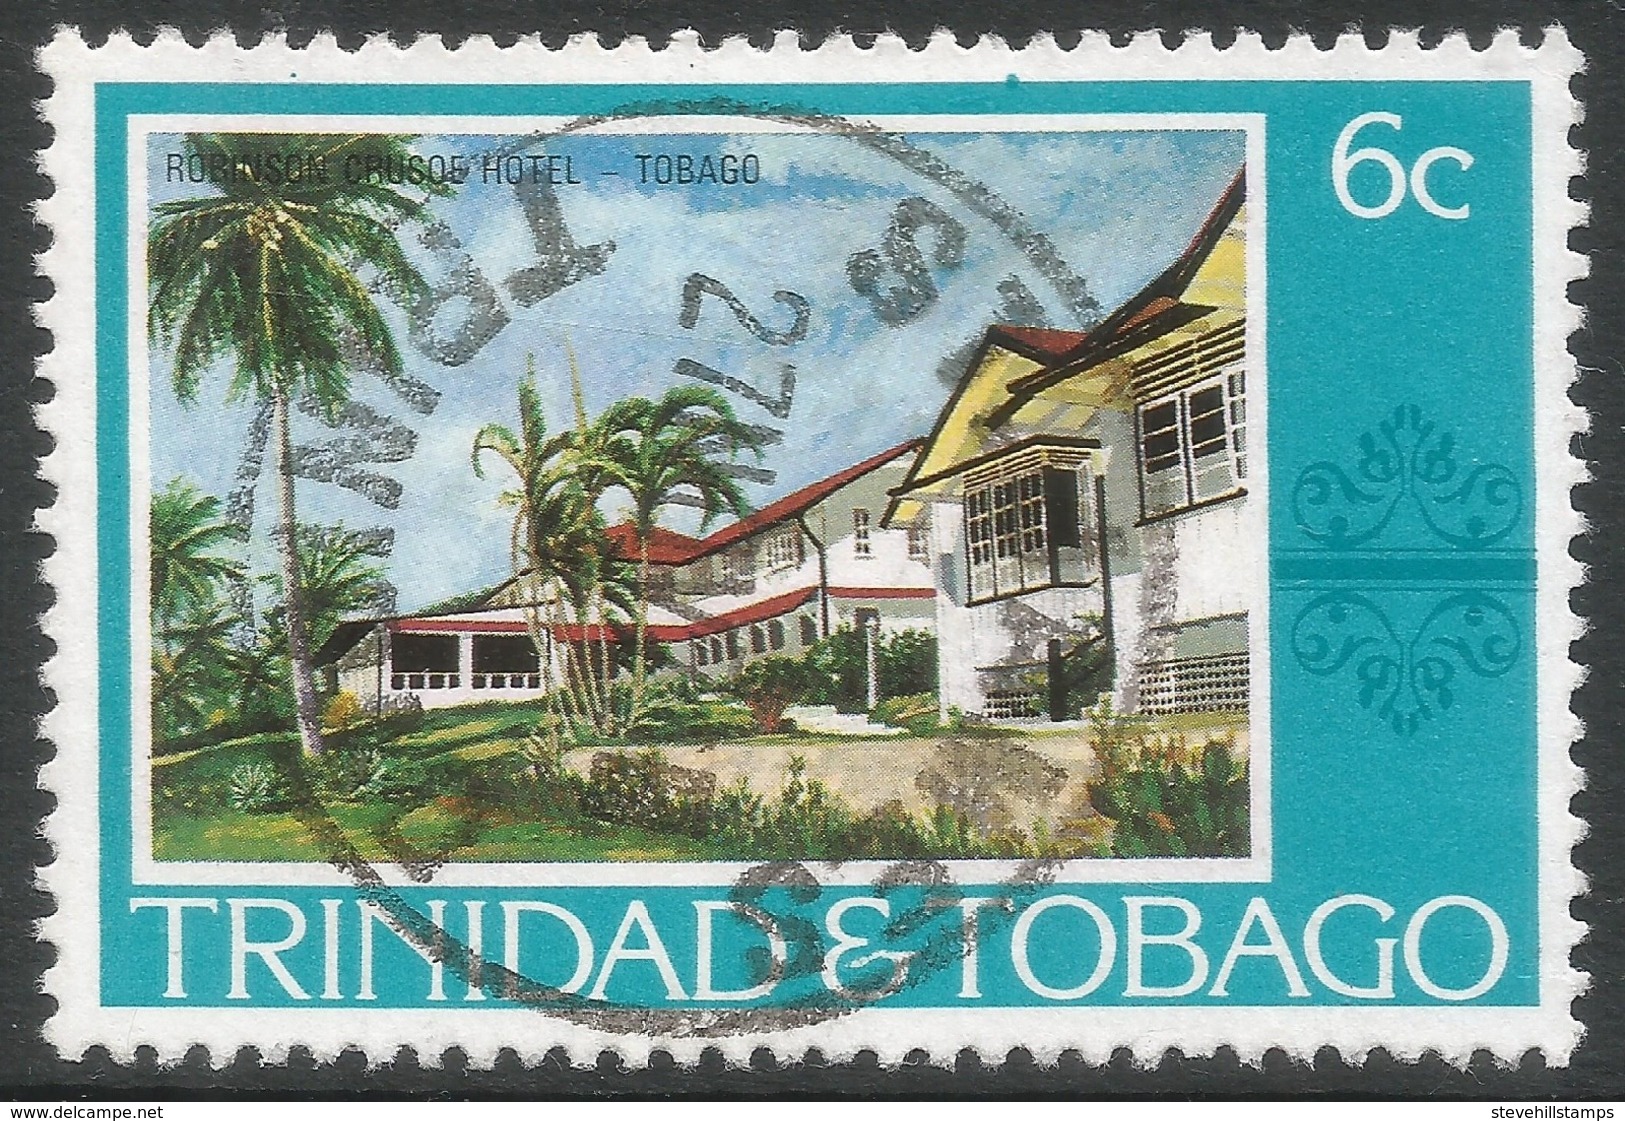 Trinidad & Tobago. 1976 Paintings, Hotels And Orchids. 6c Used. SG 480 - Trinidad & Tobago (1962-...)